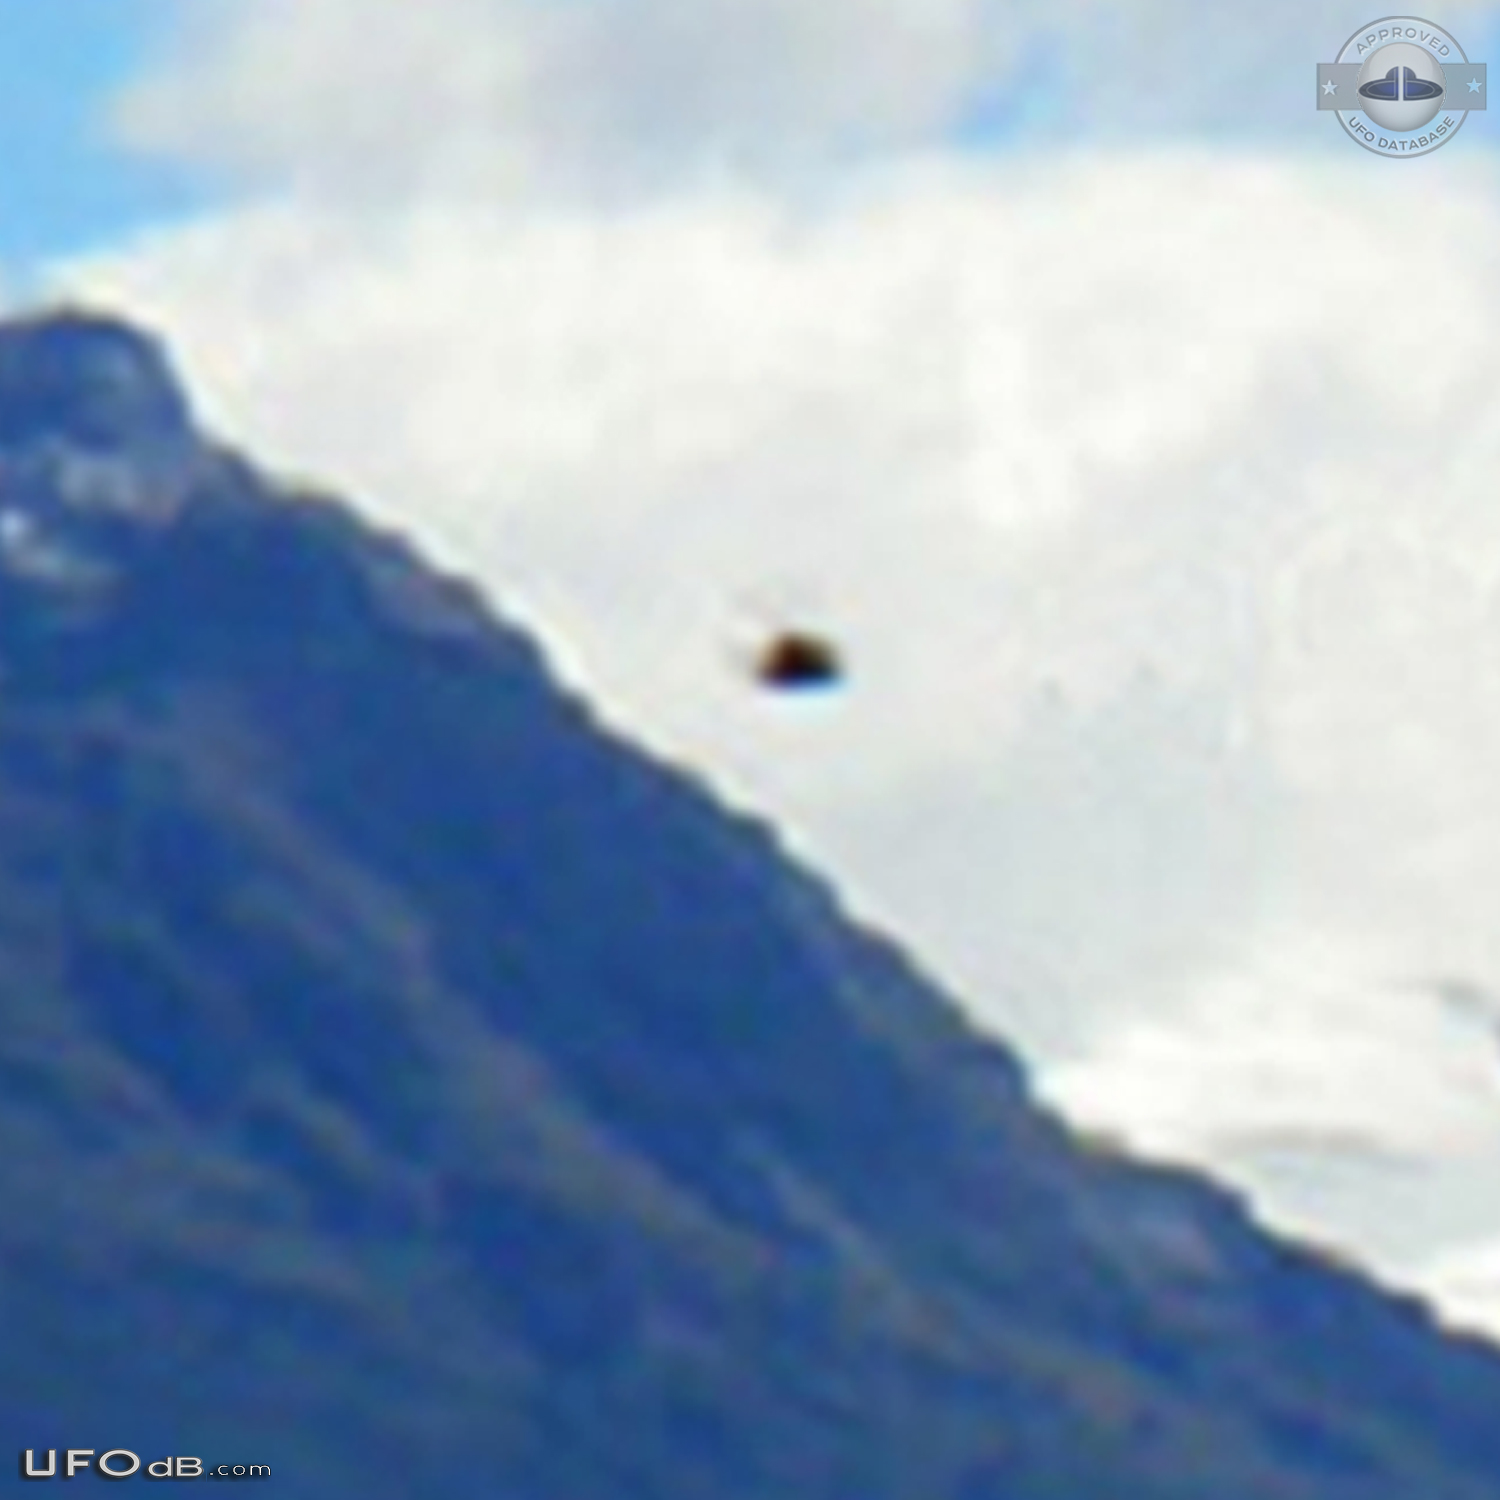 UFO sighting near Humboldt Mountains Glenorchy New Zealand 2015 UFO Picture #662-4